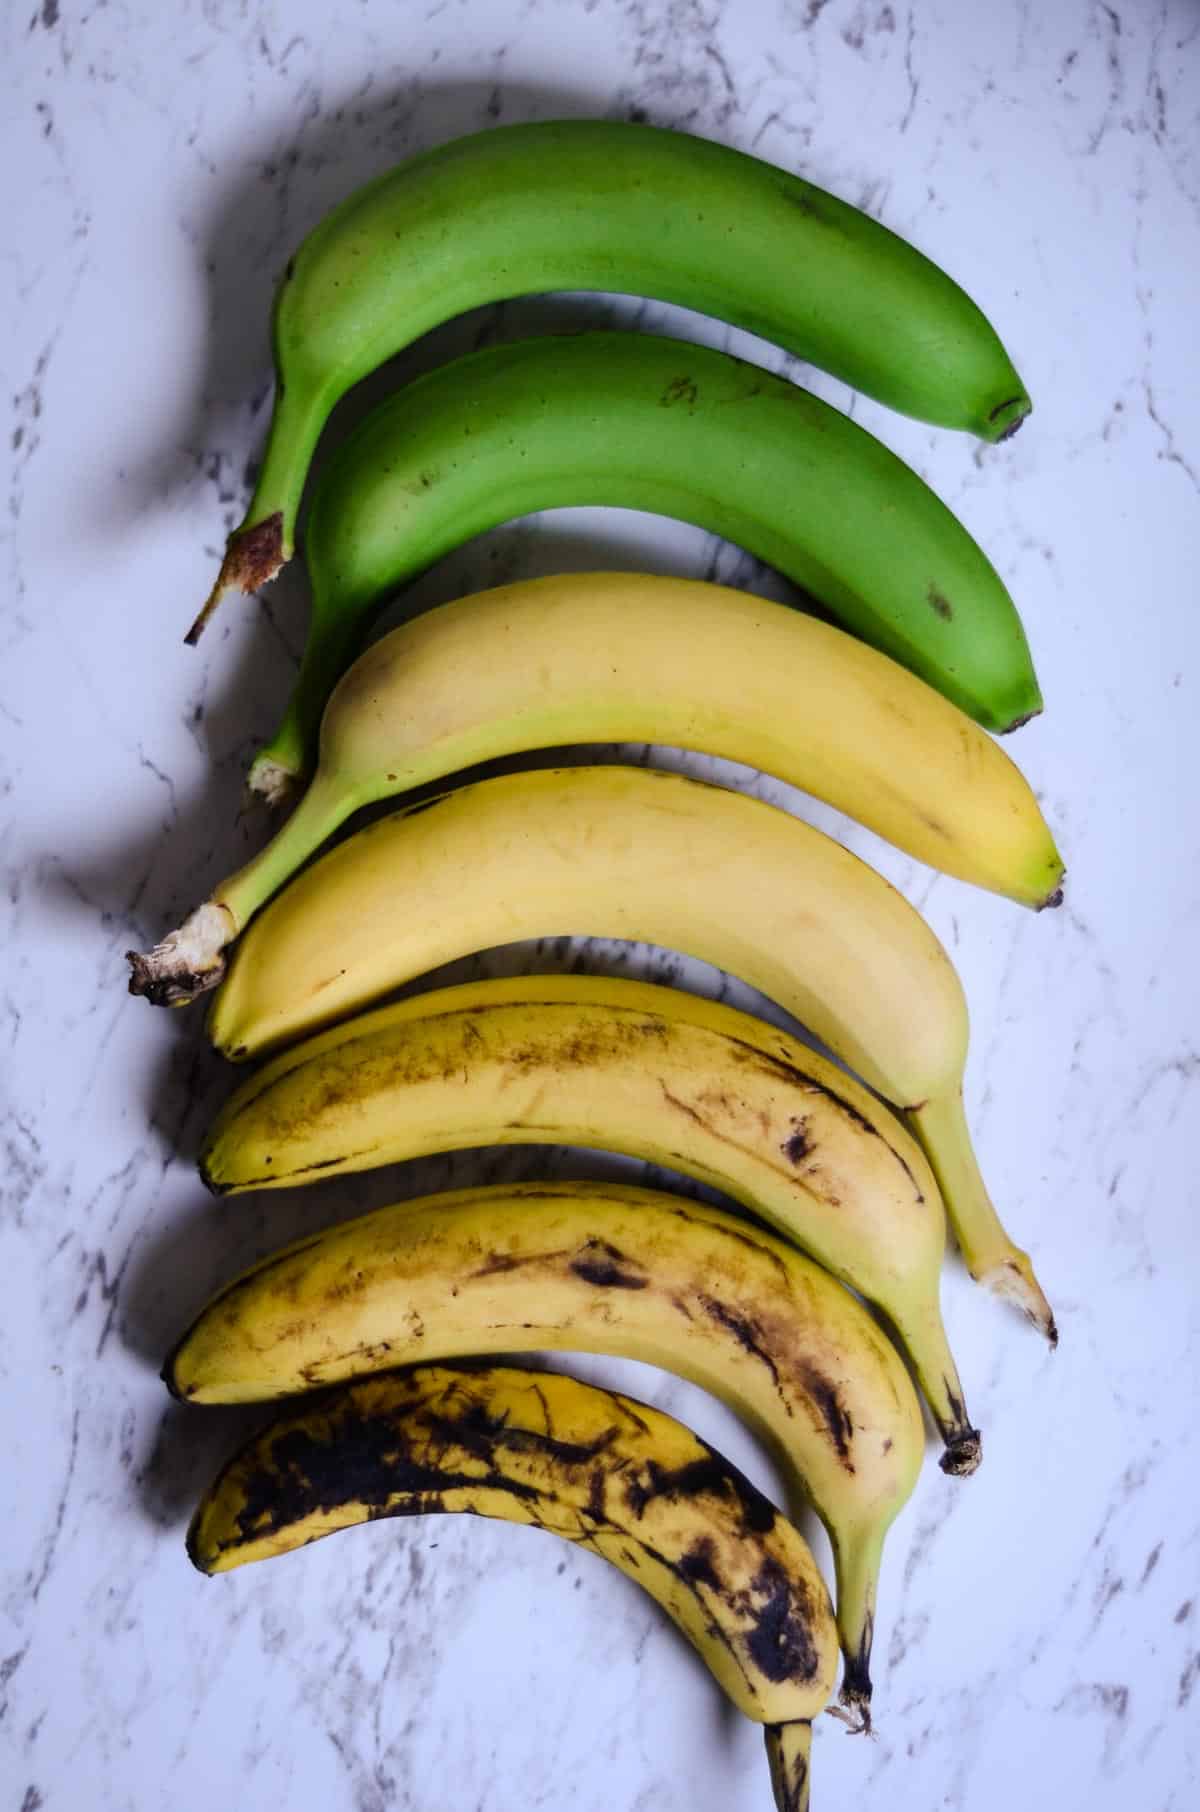 Green bananas, yellow bananas, and brown bananas laying on the counter.